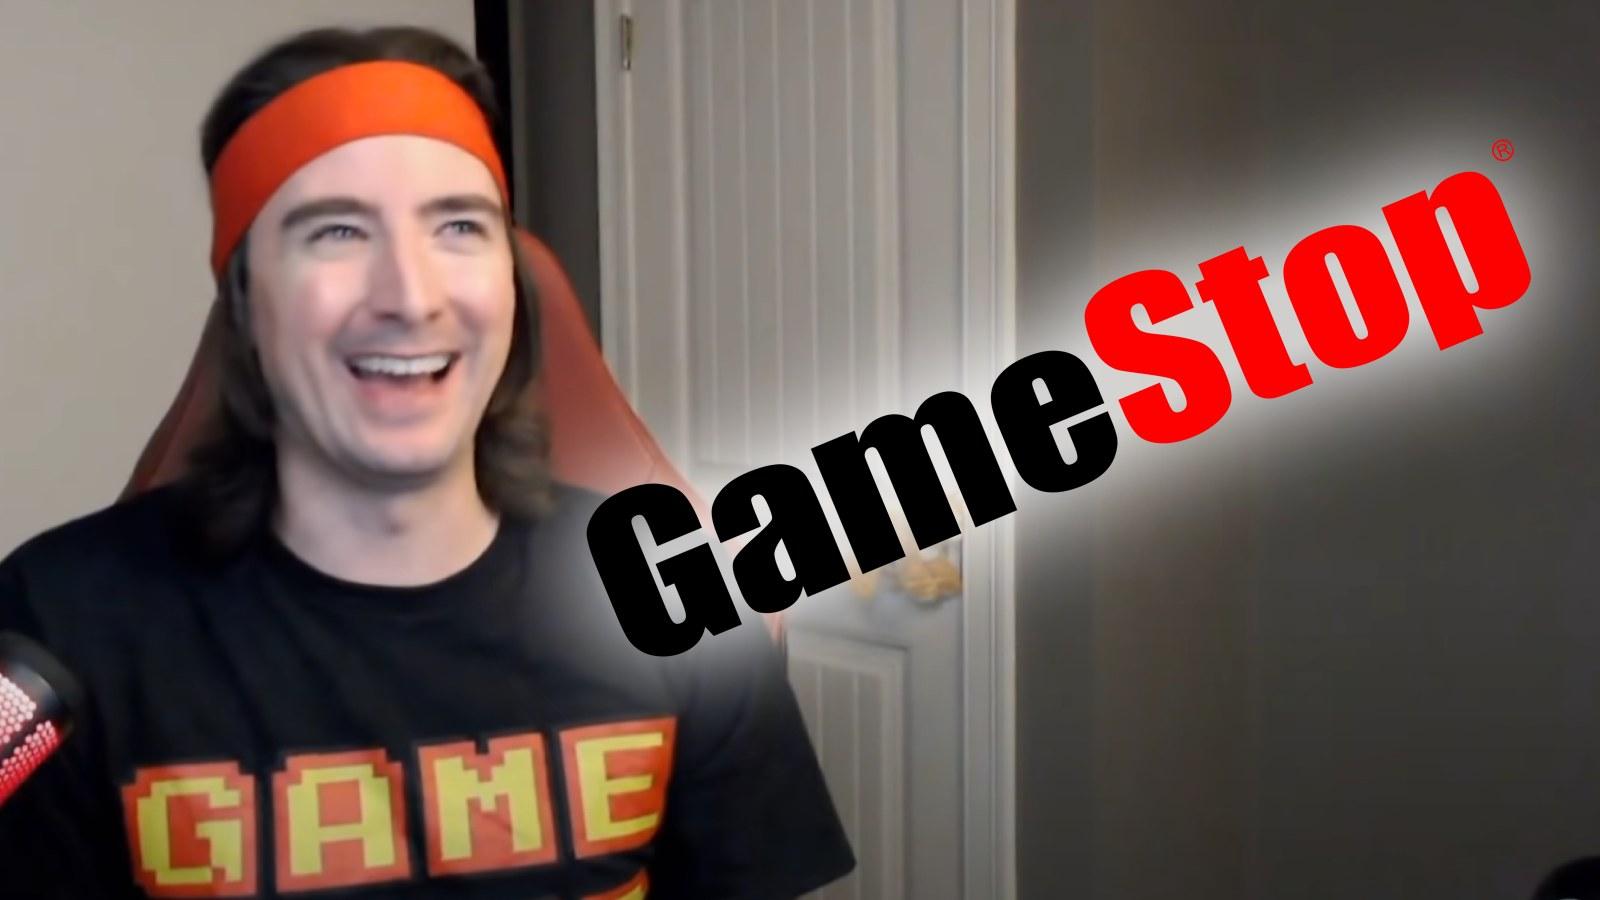 GameStop stock influencer Roaring Kitty breaks 600K viewers in massive YouTube stream - Dexerto